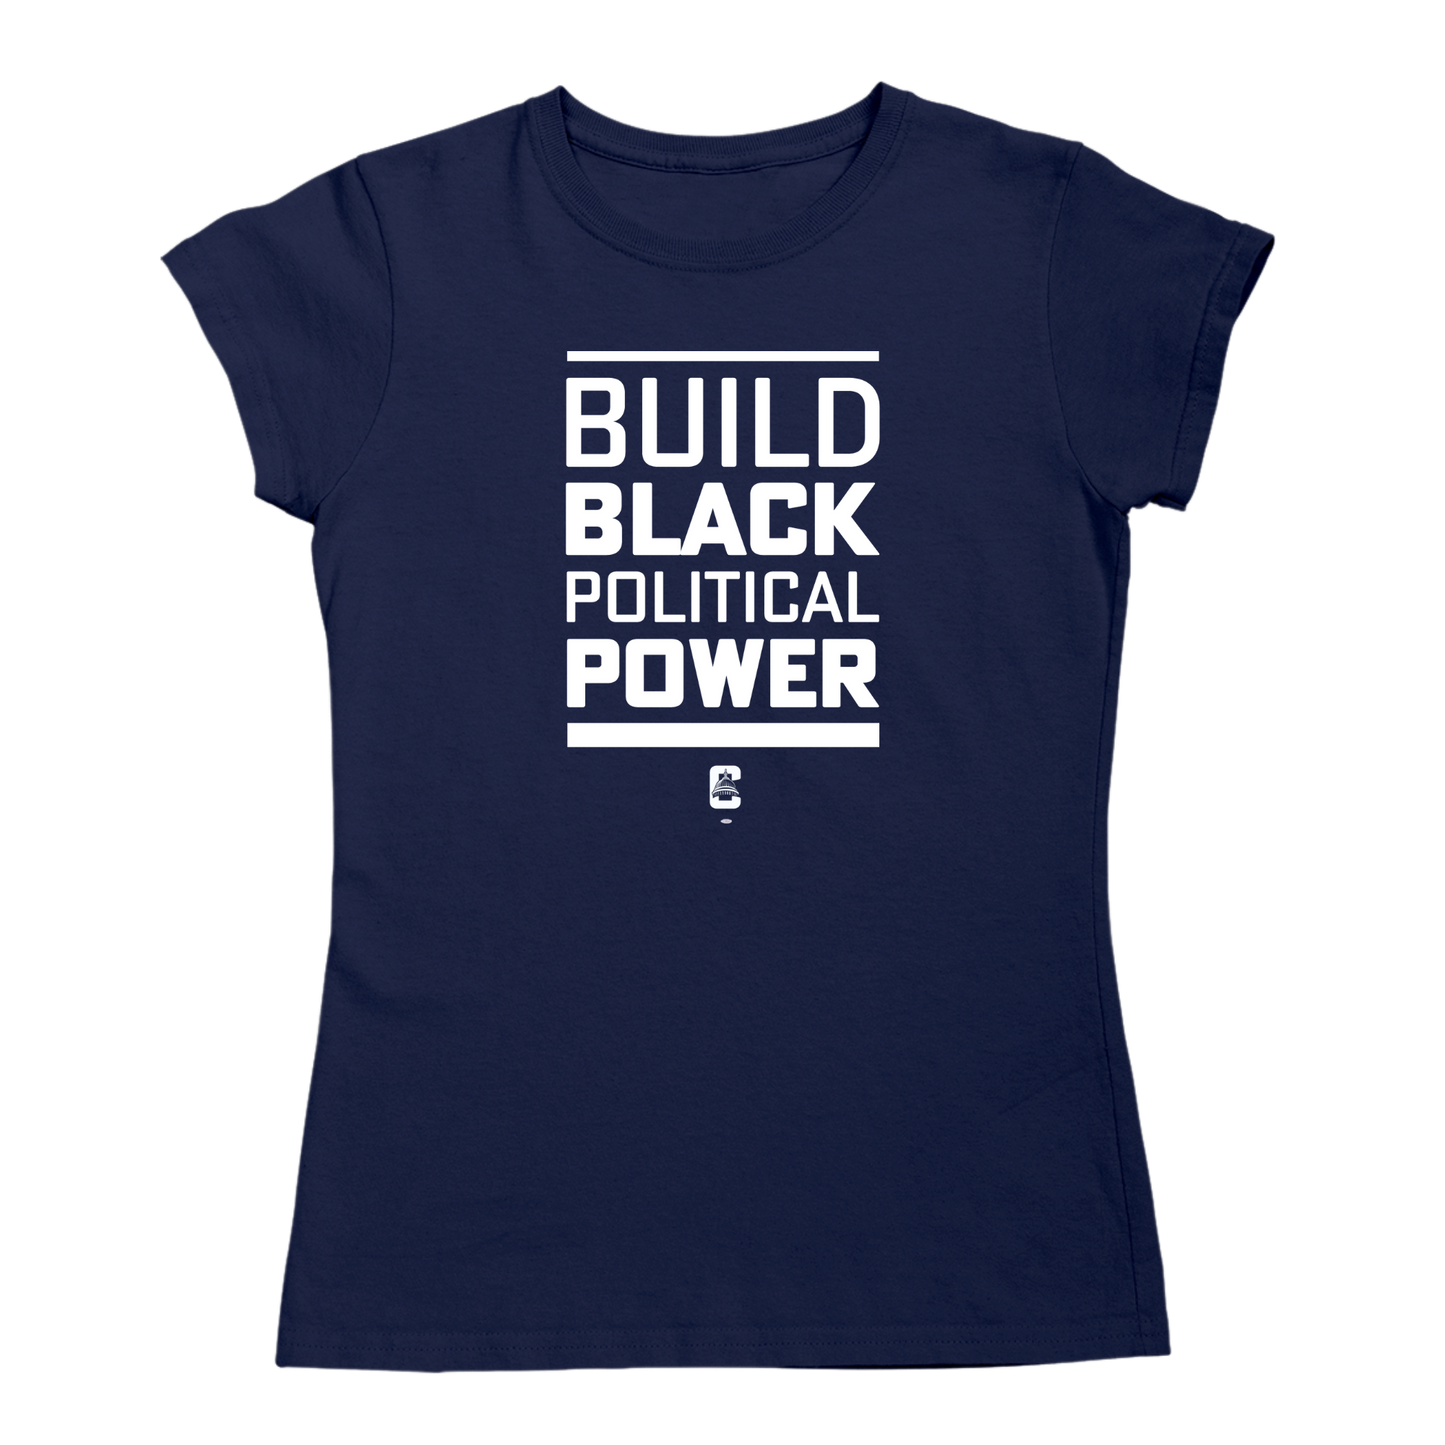 BUILD BLACK POLITICAL POWER T-SHIRT